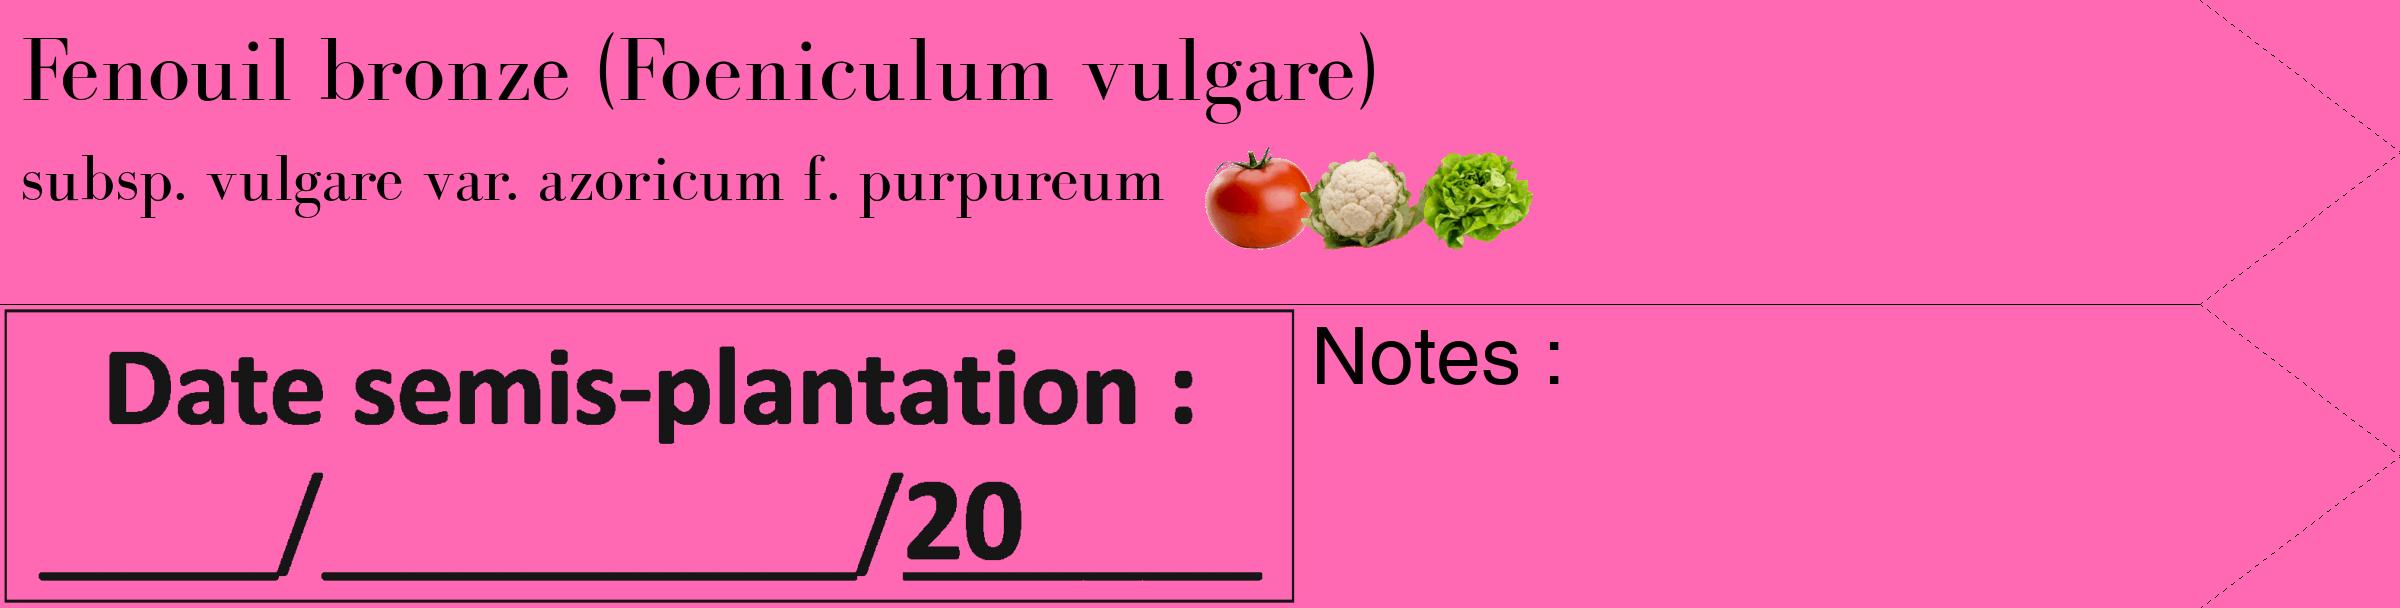 Étiquette de : Foeniculum vulgare subsp. vulgare var. azoricum f. purpureum - format c - style noire42_simple_simplebod avec comestibilité simplifiée